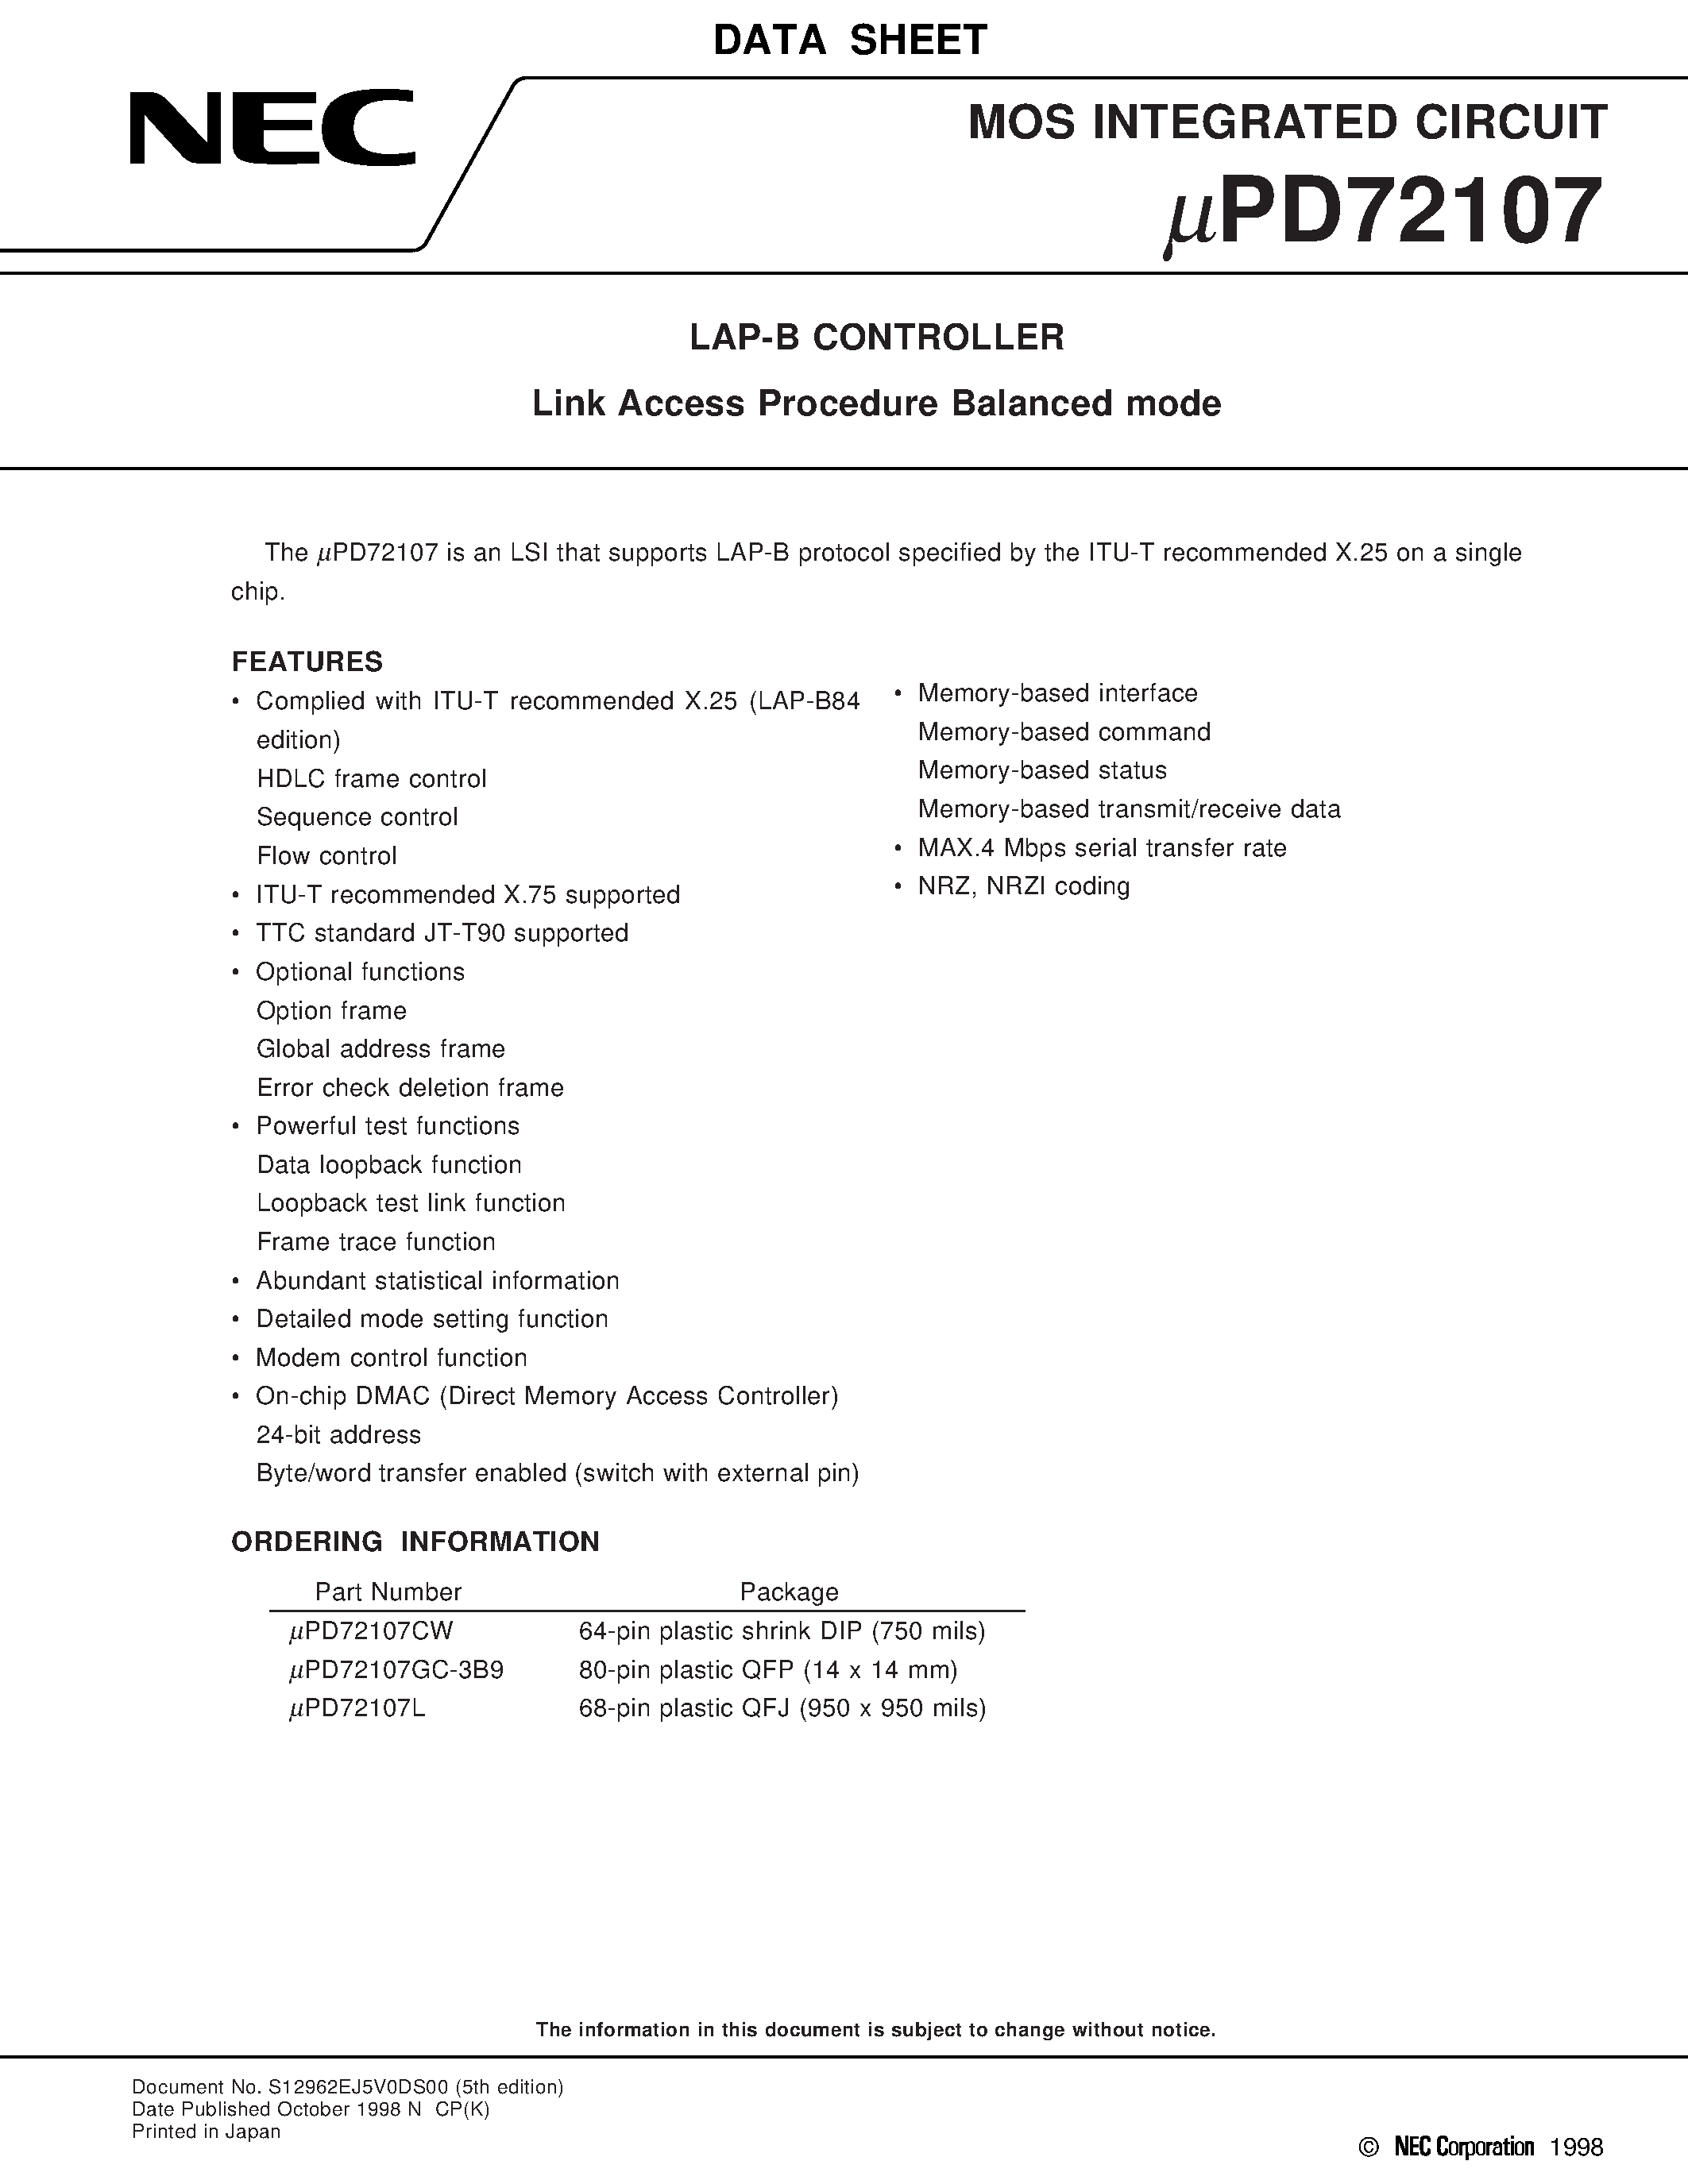 Даташит uPD72107CW - LAP-B CONTROLLER(Link Access Procedure Balanced mode) страница 1